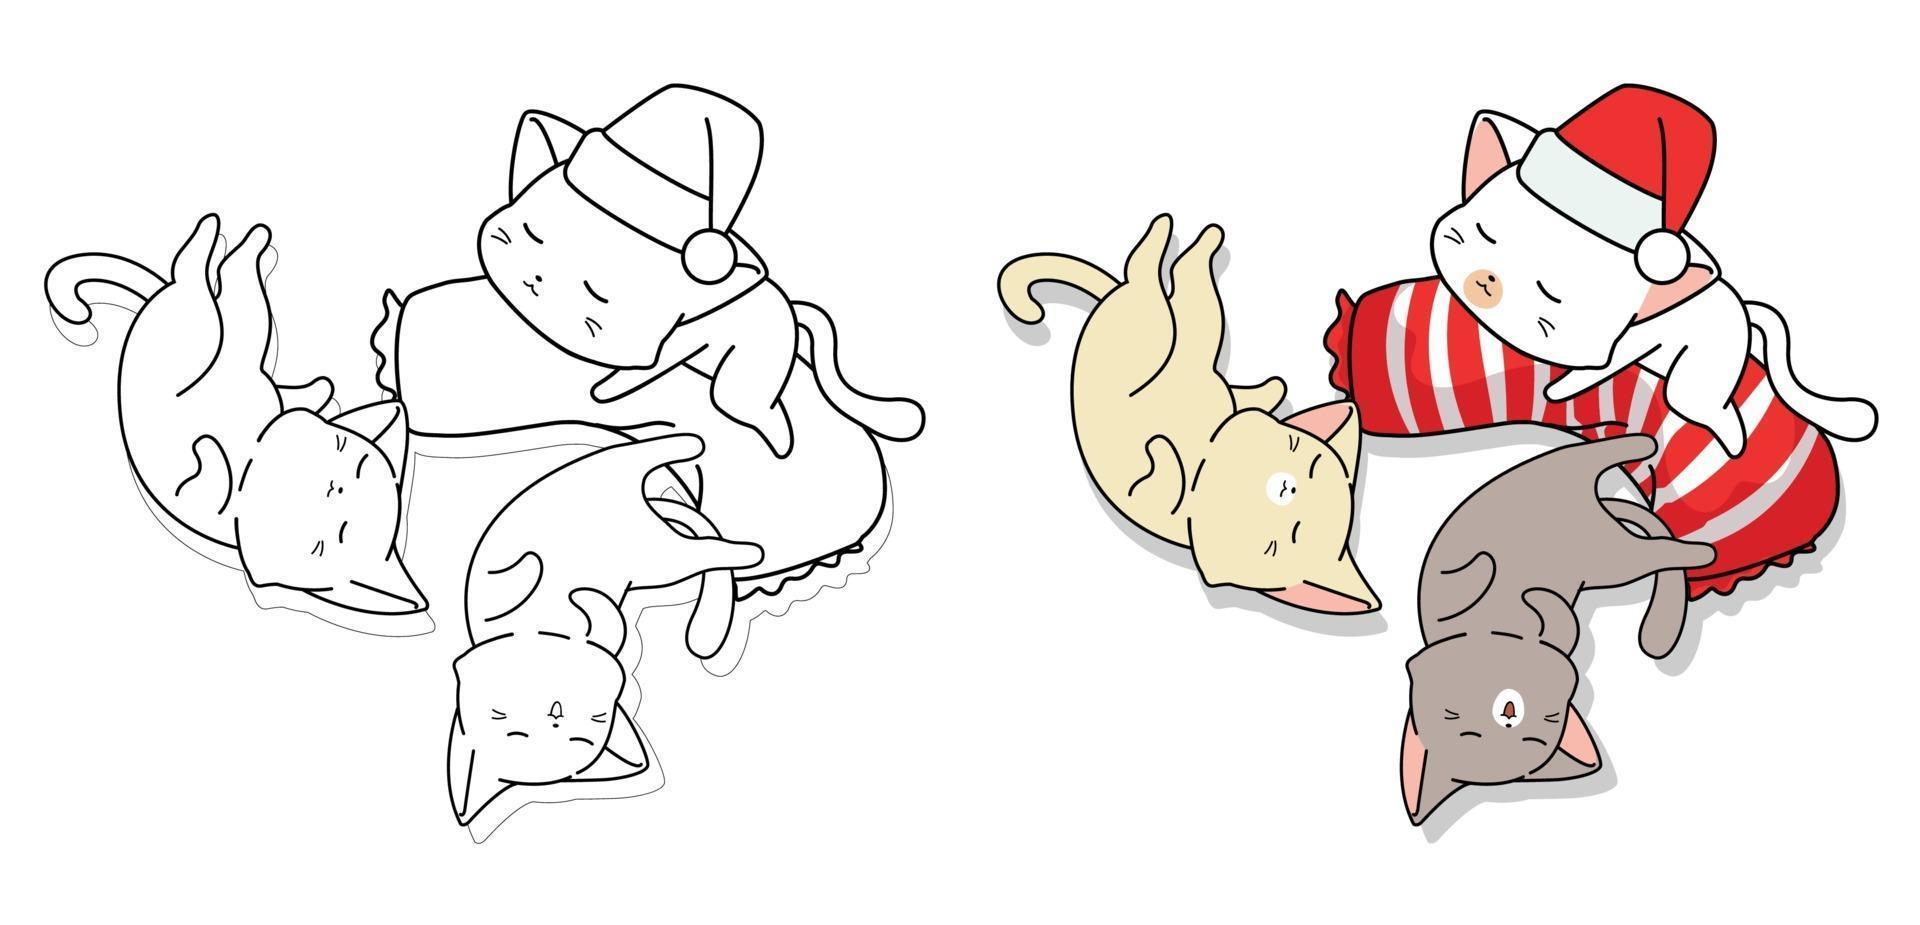 Cute sleeping cats cartoon coloring page vector